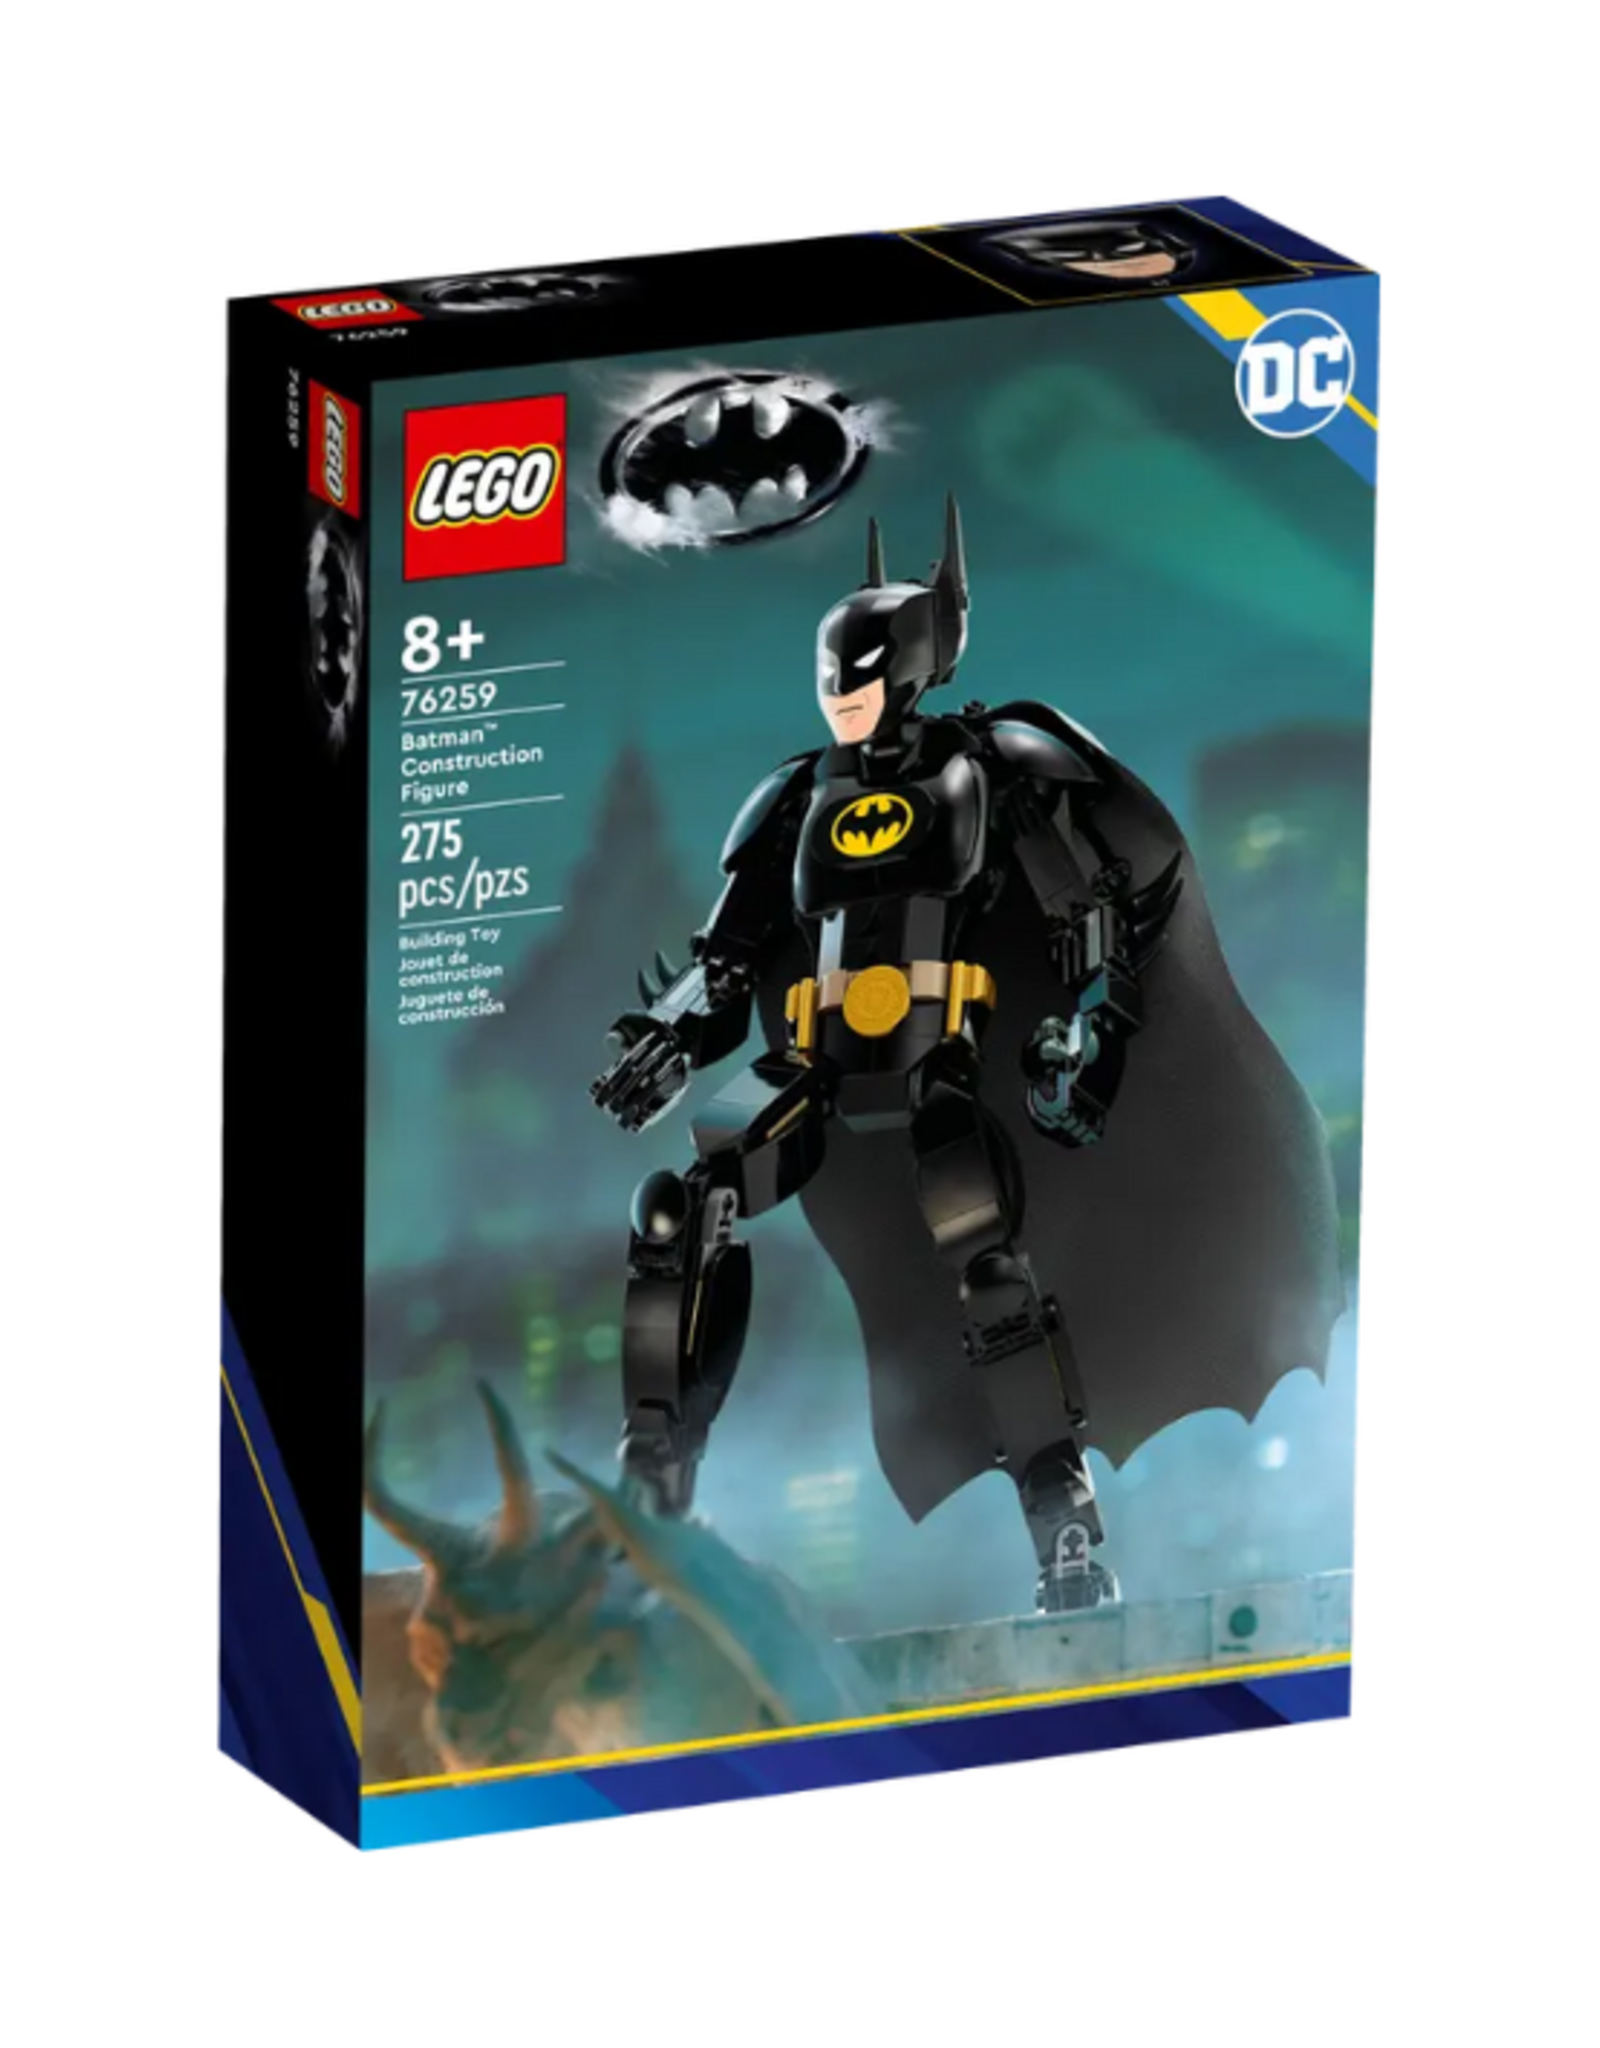 Lego Lego - DC - 76259 - Batman™ Construction Figure